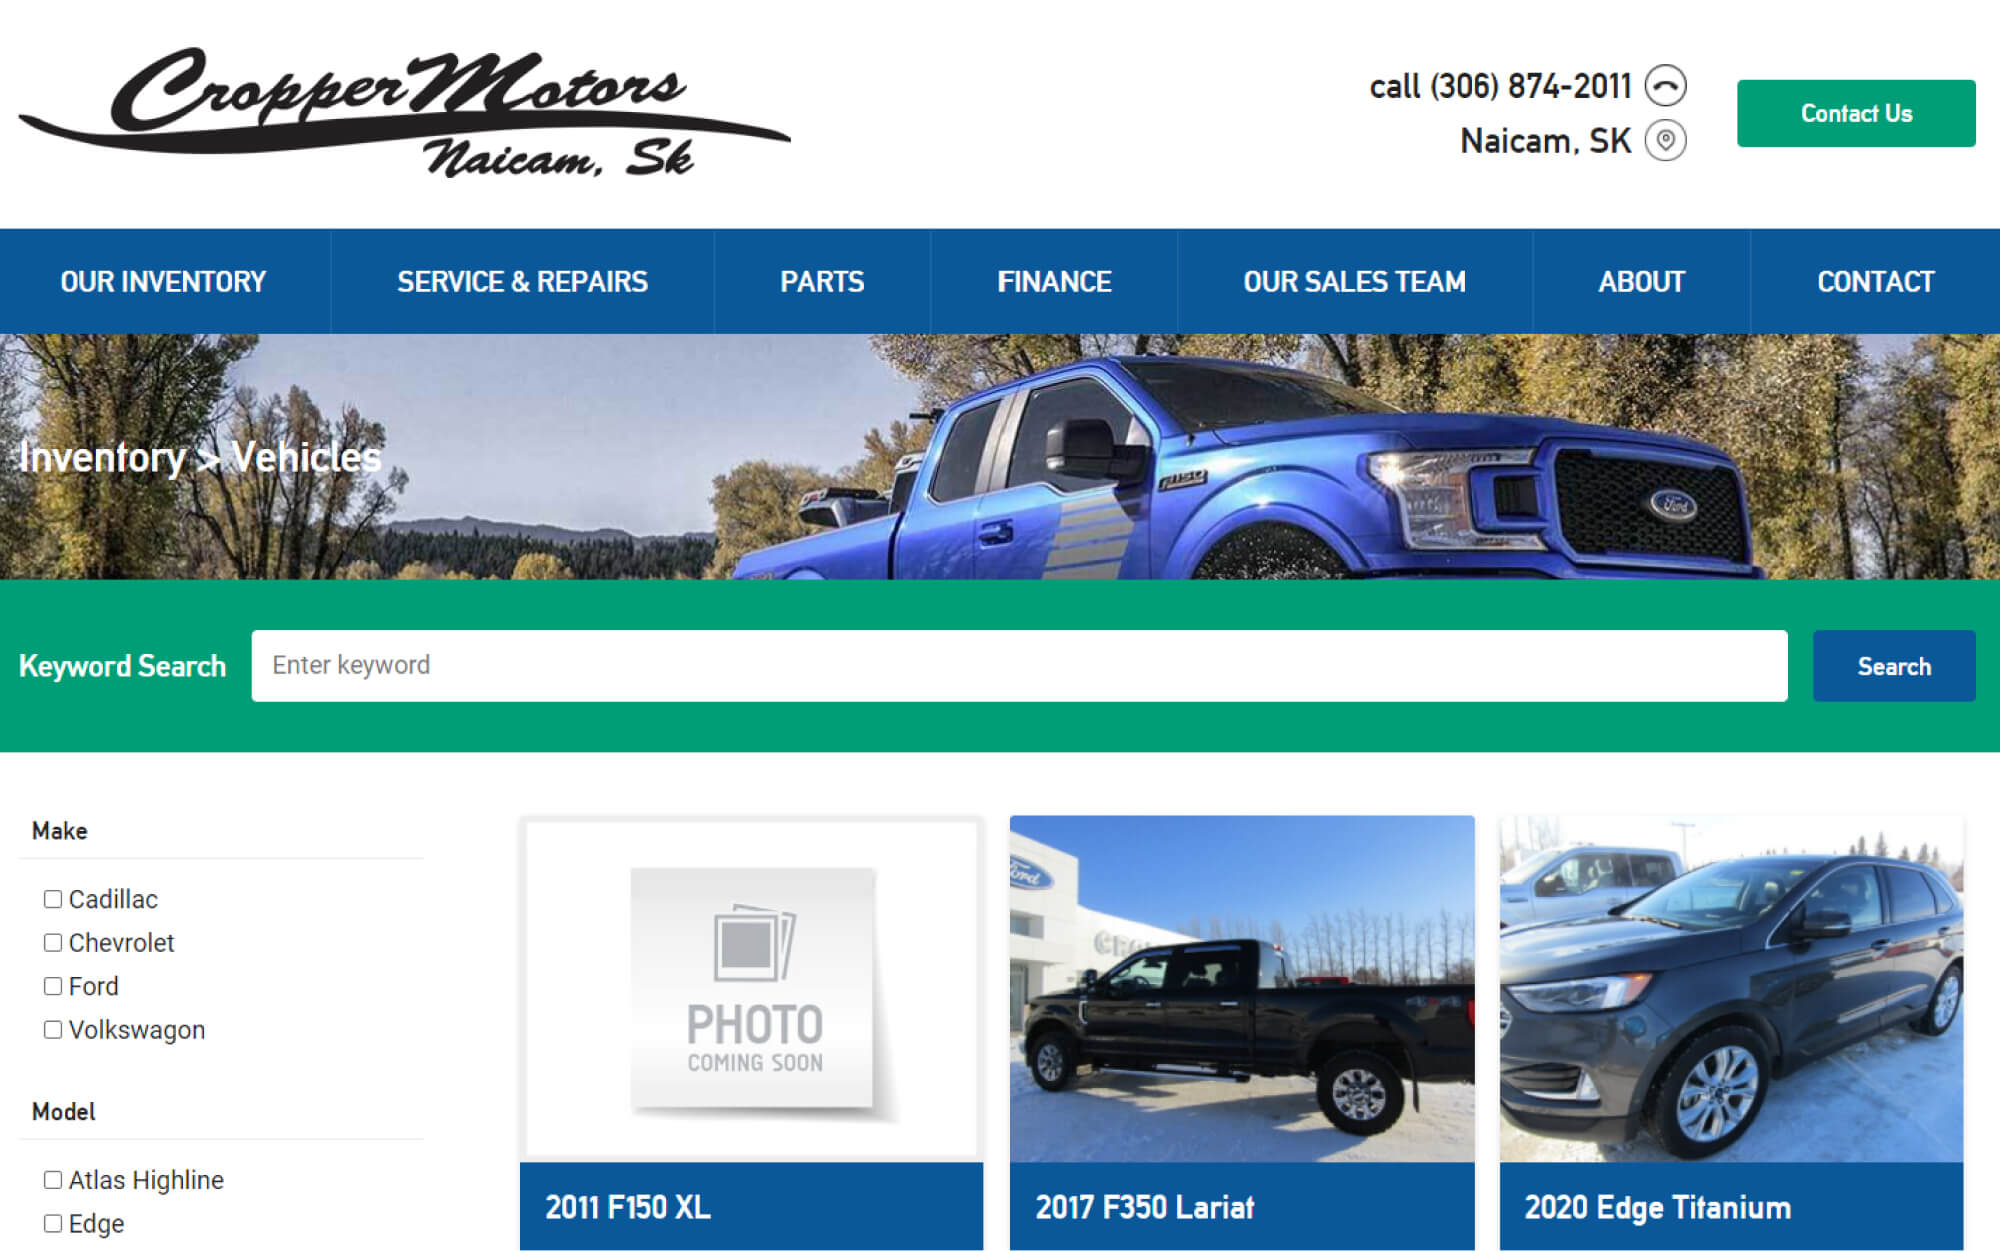 Home page of Cropper Motor's custom website